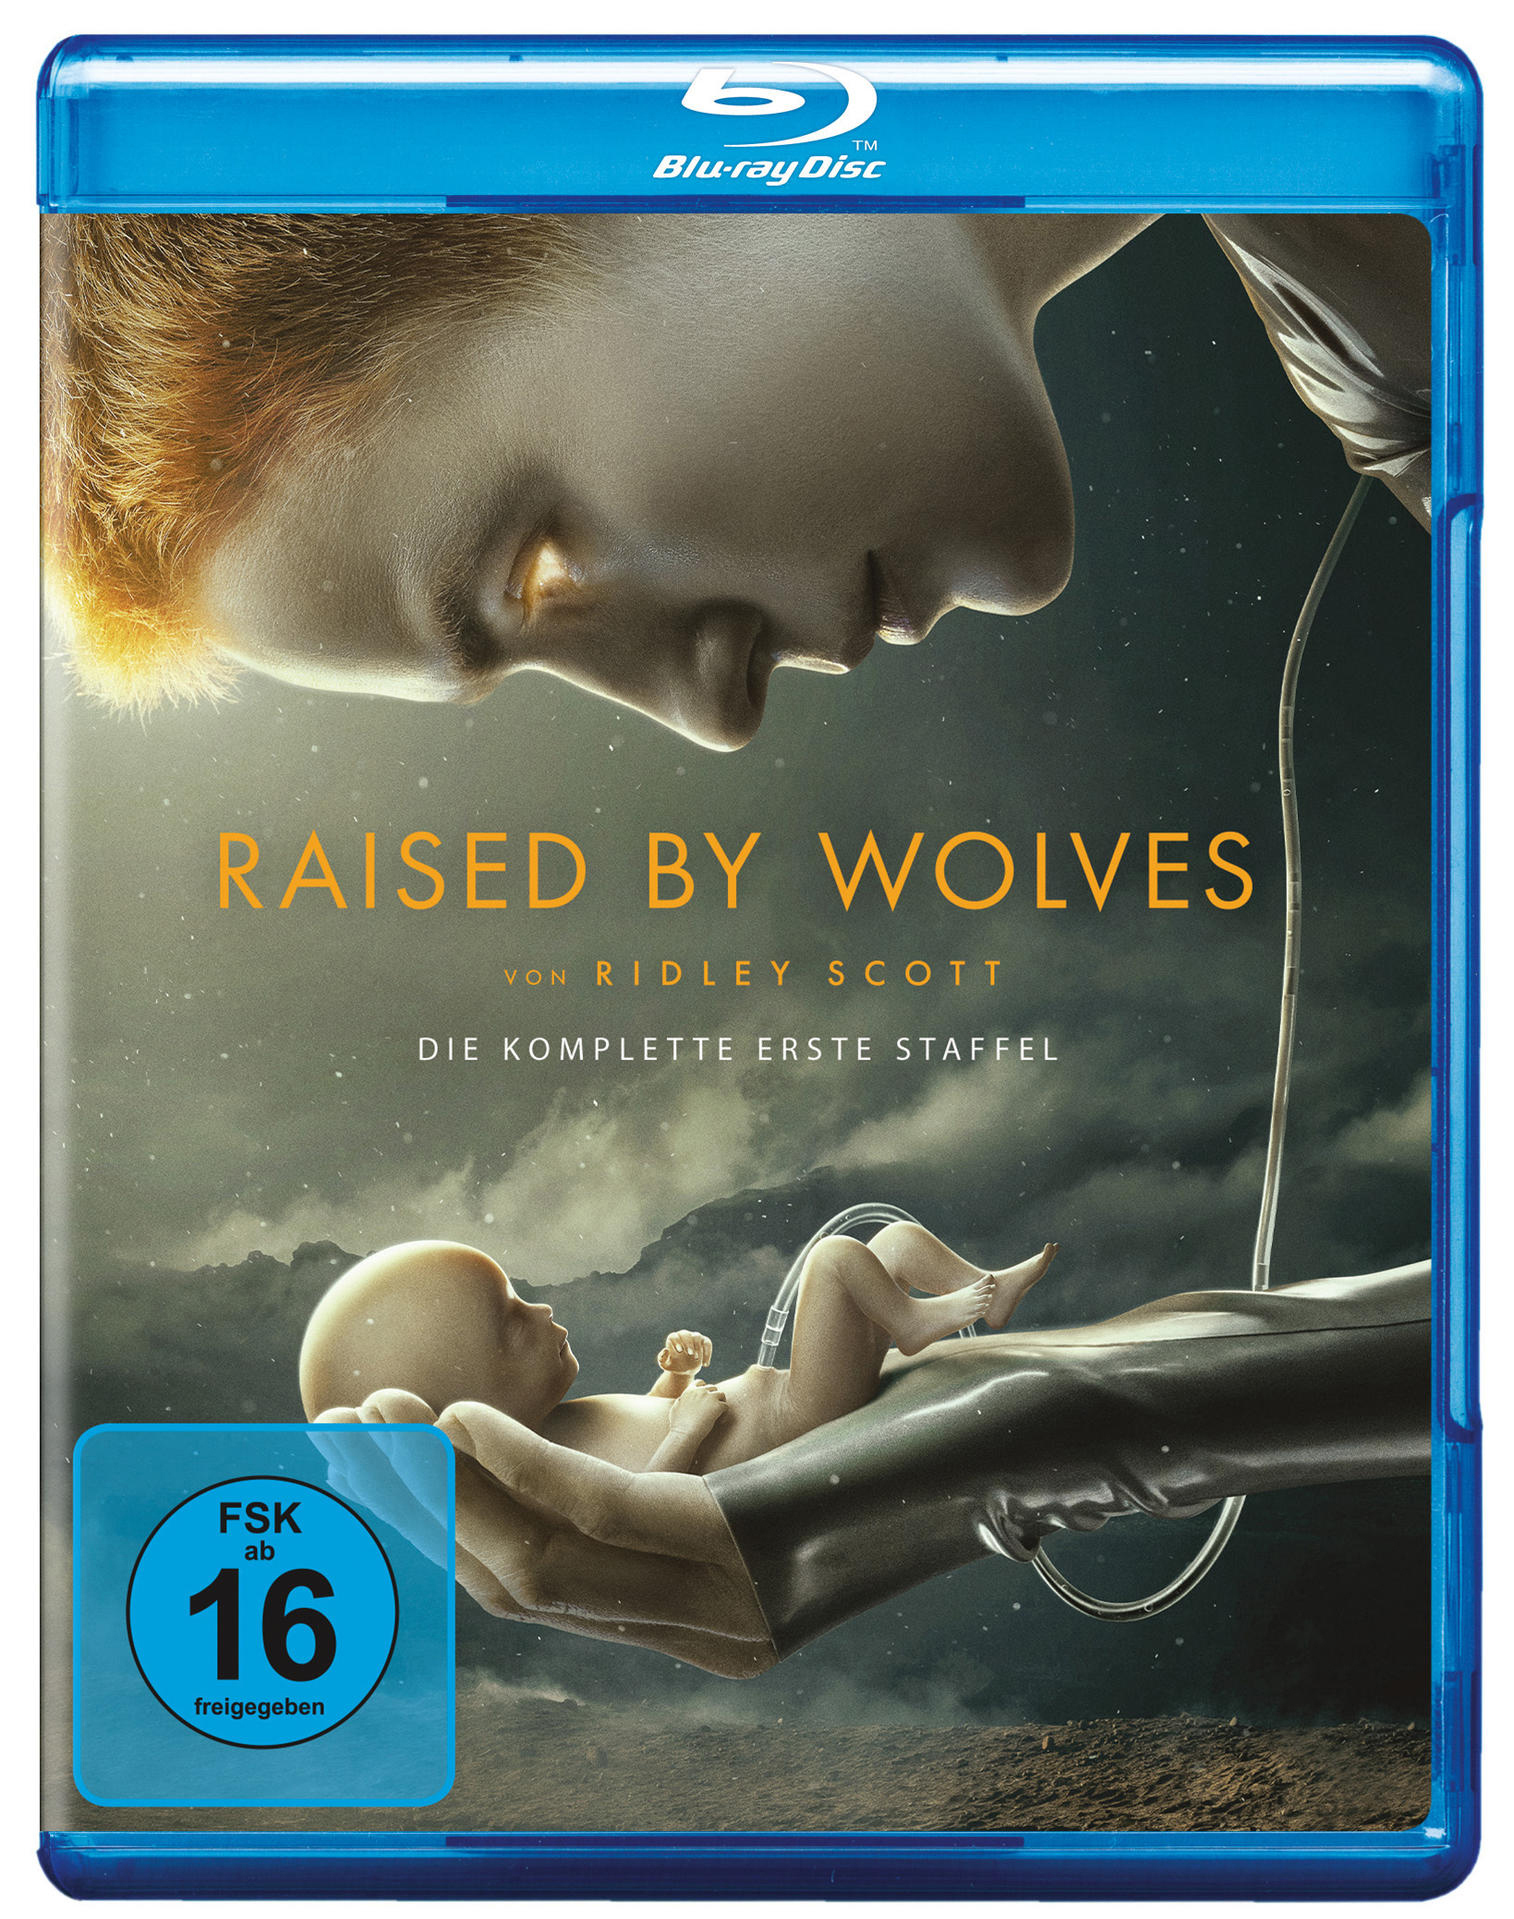 Blu-ray 1 Raised by Staffel Wolves -